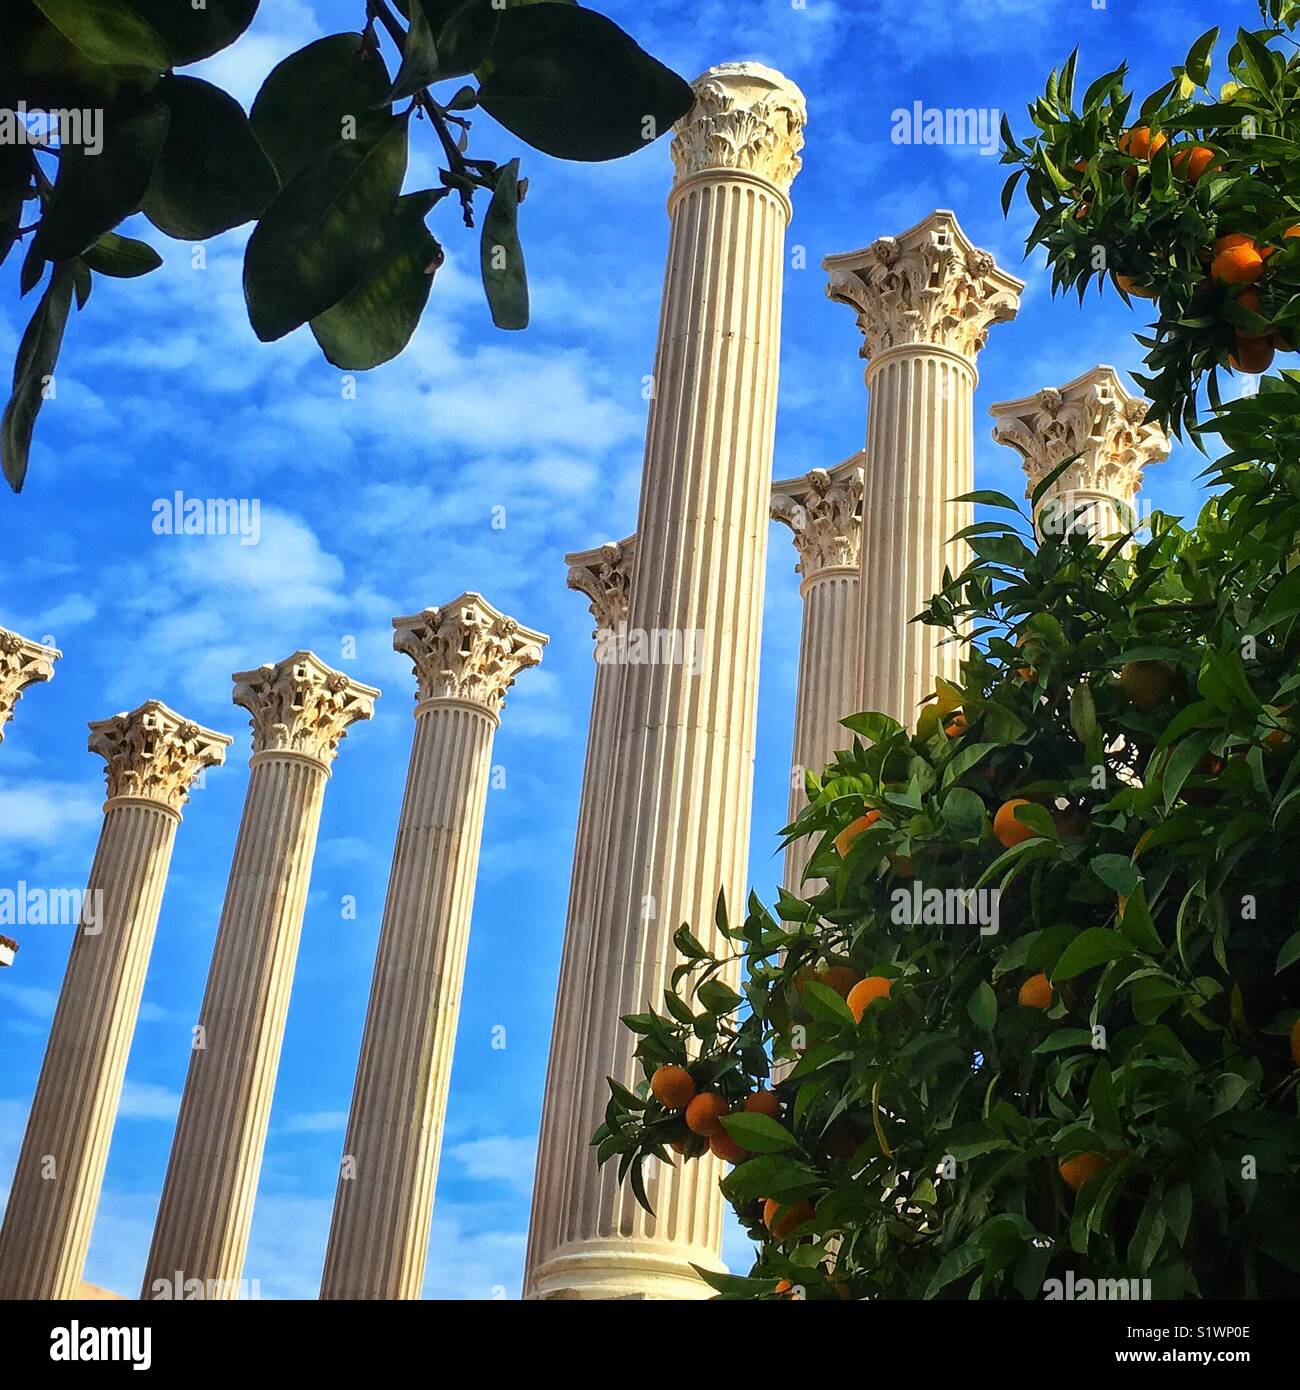 Roman temple columns alongside street orange trees in Cordoba, Spain Stock Photo